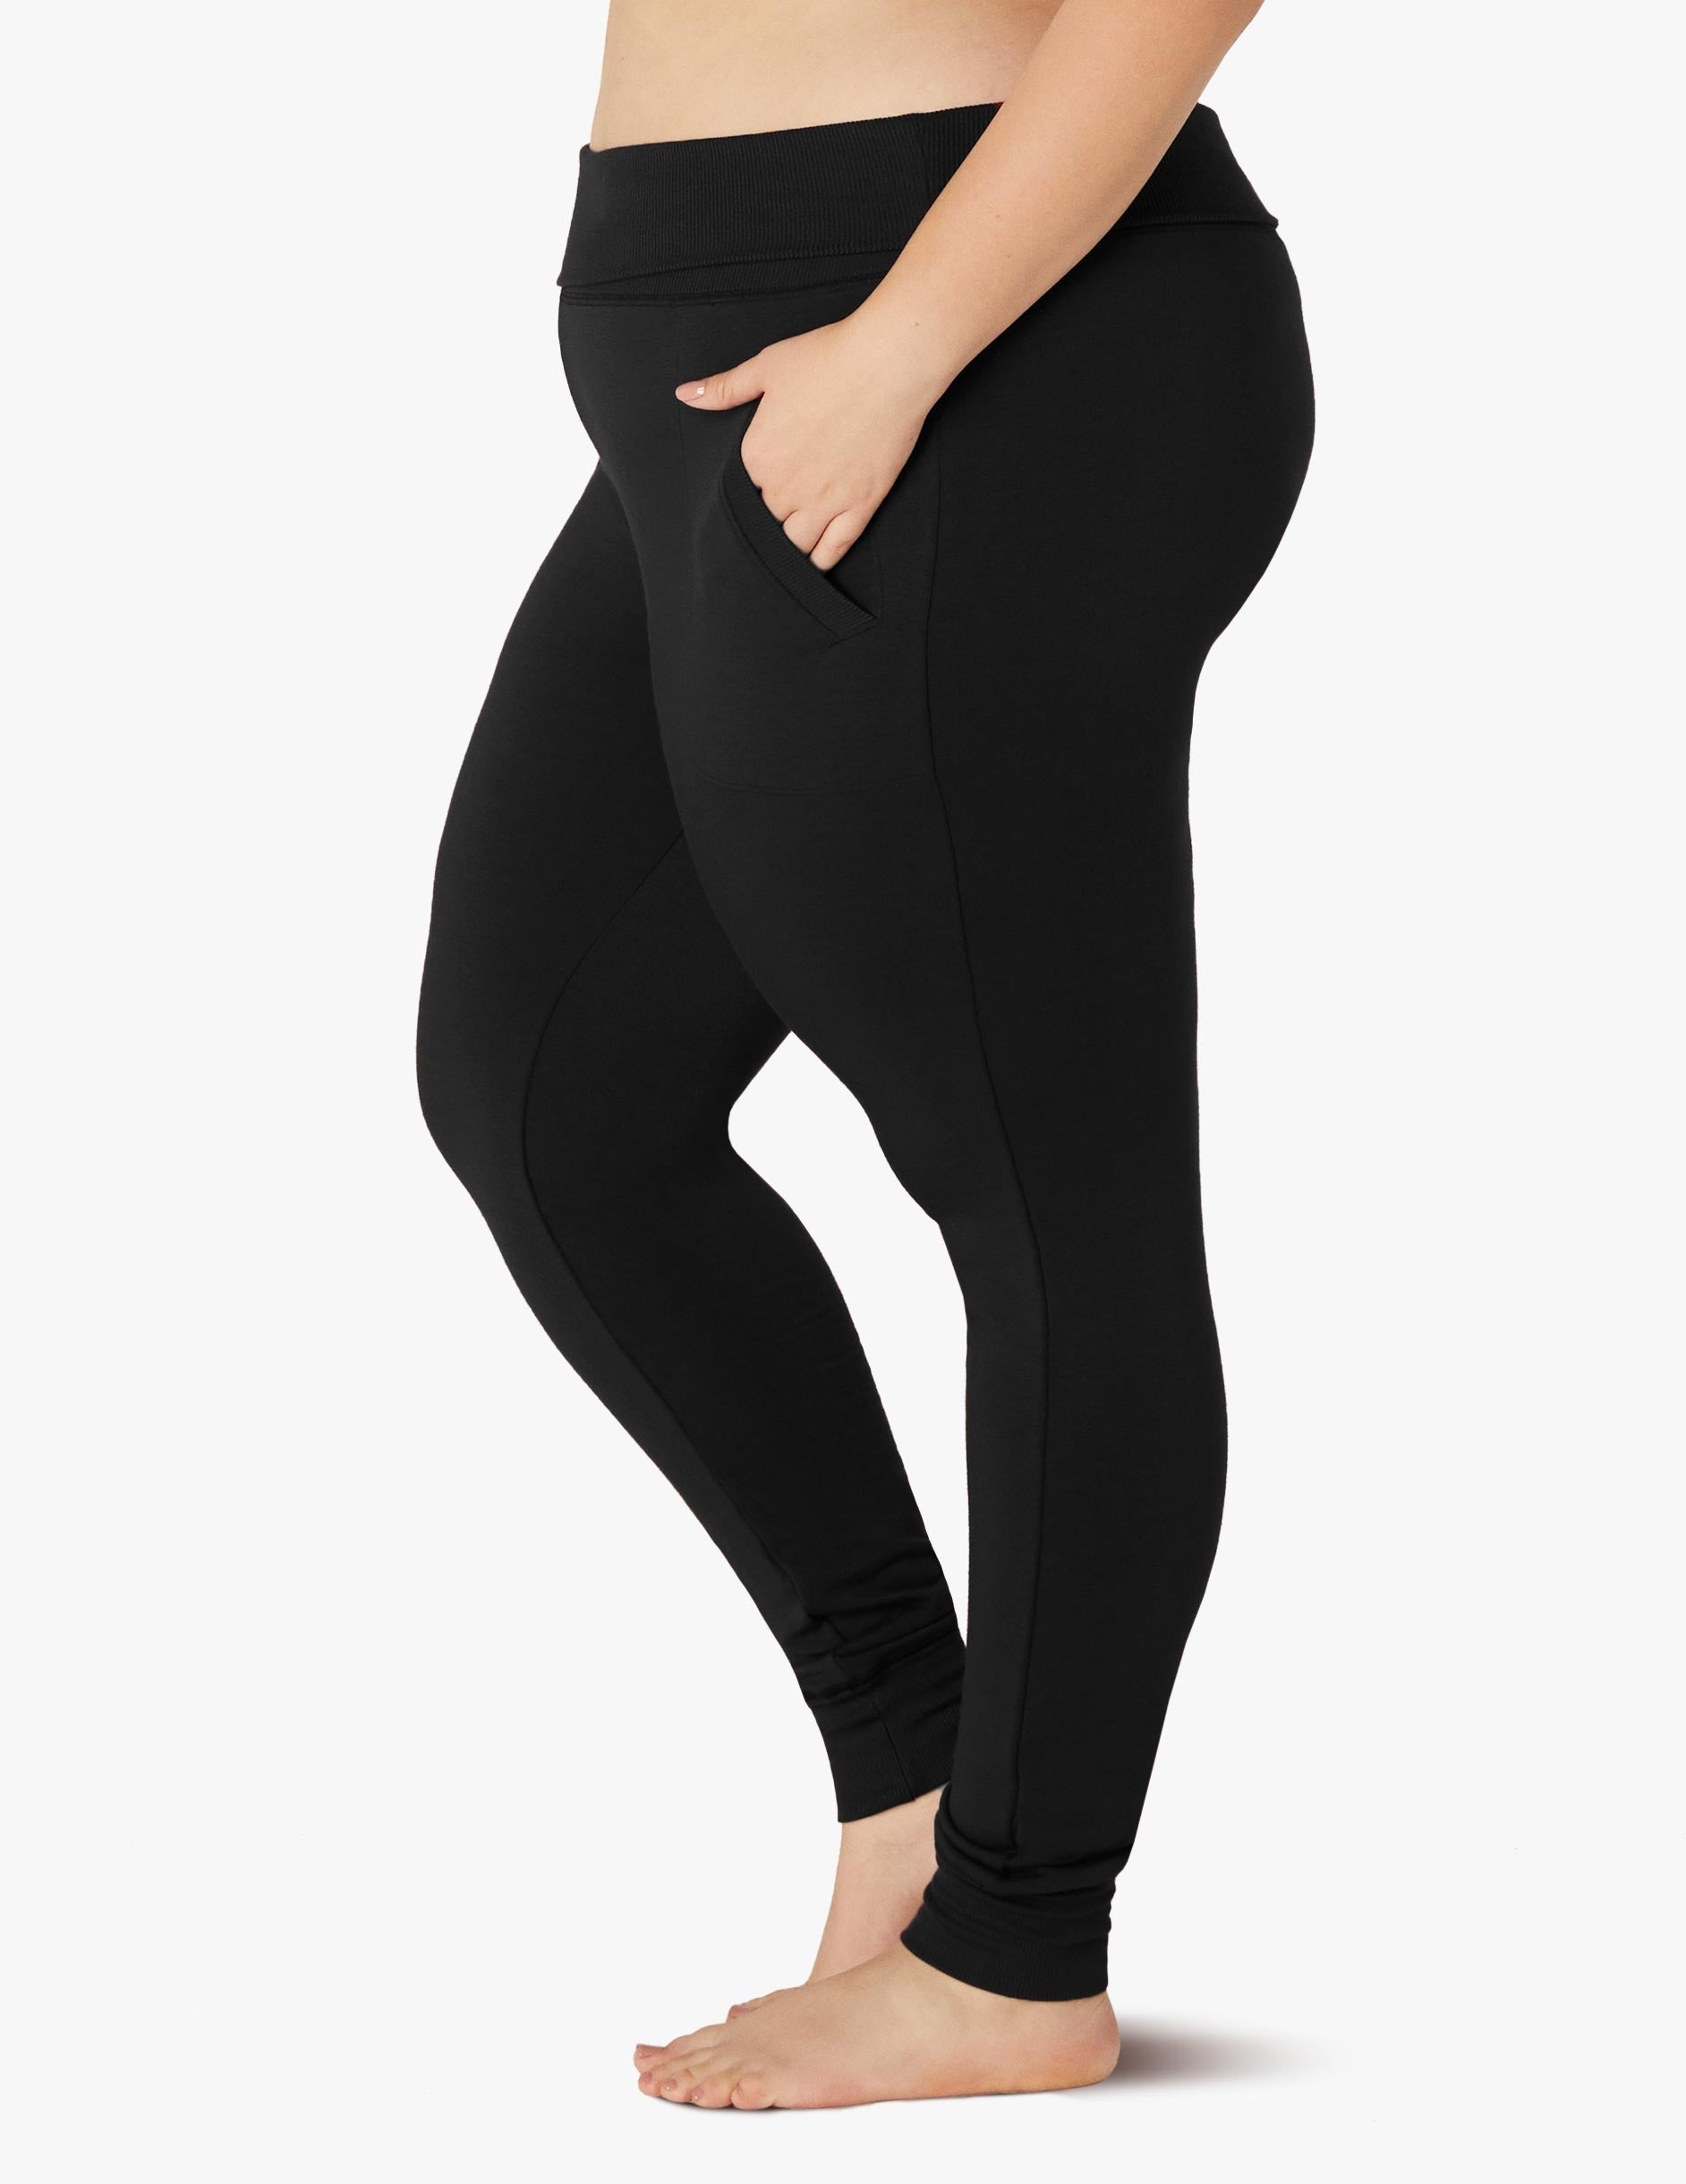 FLAVOFIIT Comfortable Soft Leggings for Women Yoga Pants with